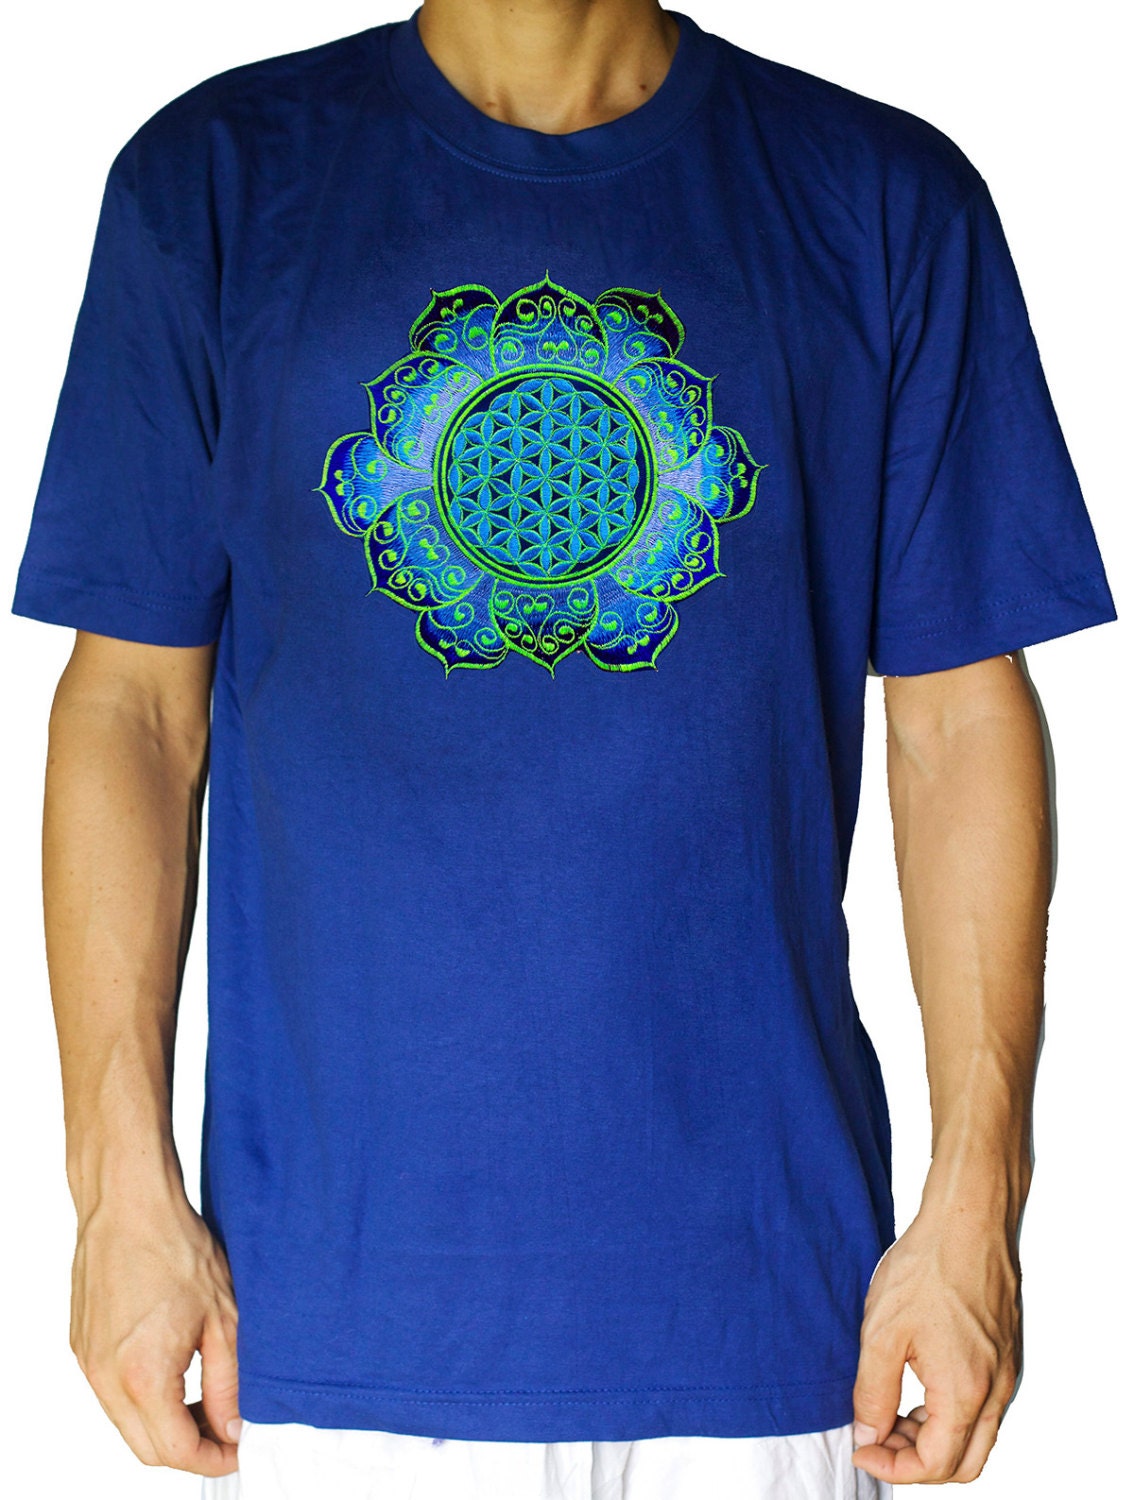 Blue Flower of Life T-Shirt celtic mandala  - sacred geometry embroidery no print drunvalo melchizedek handmade - choose any colour and size